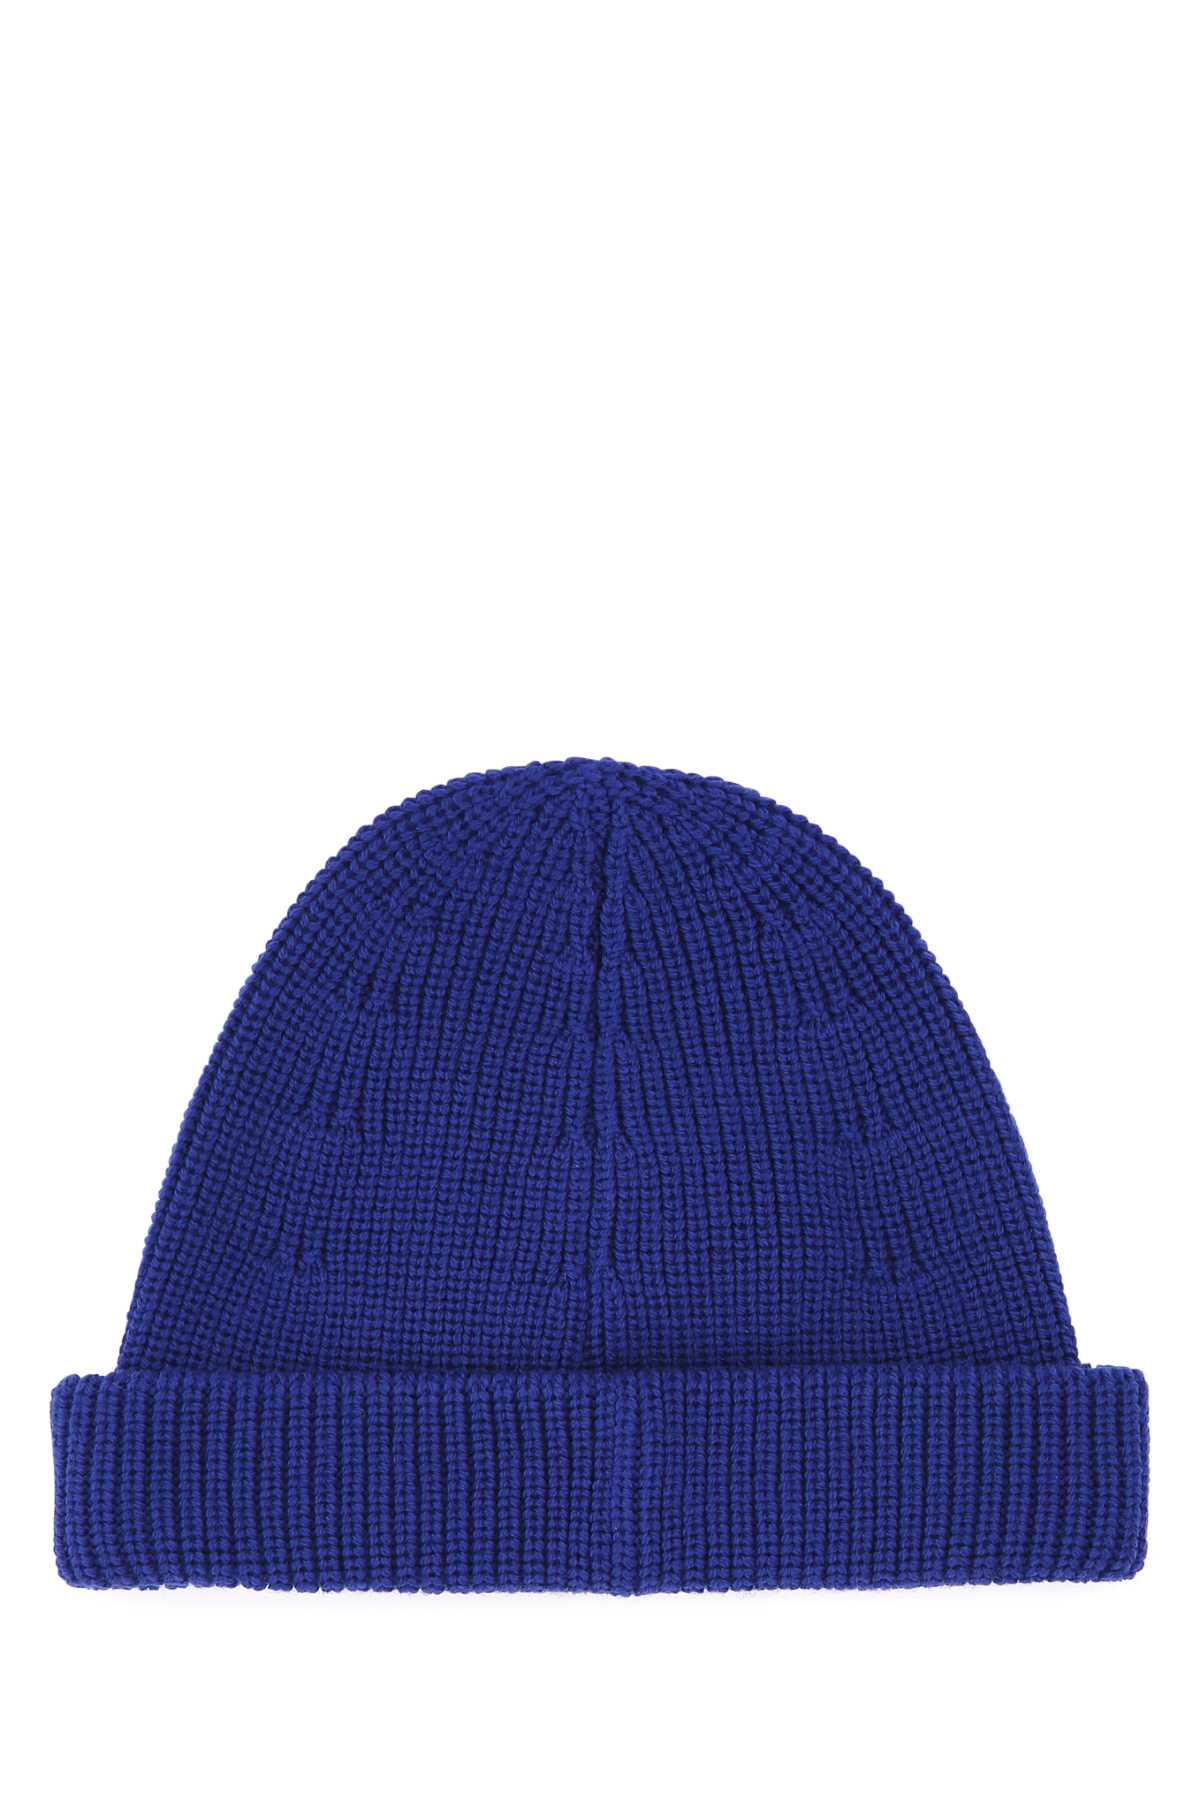 Vetements Blue Wool Beanie Hat In Royalblue